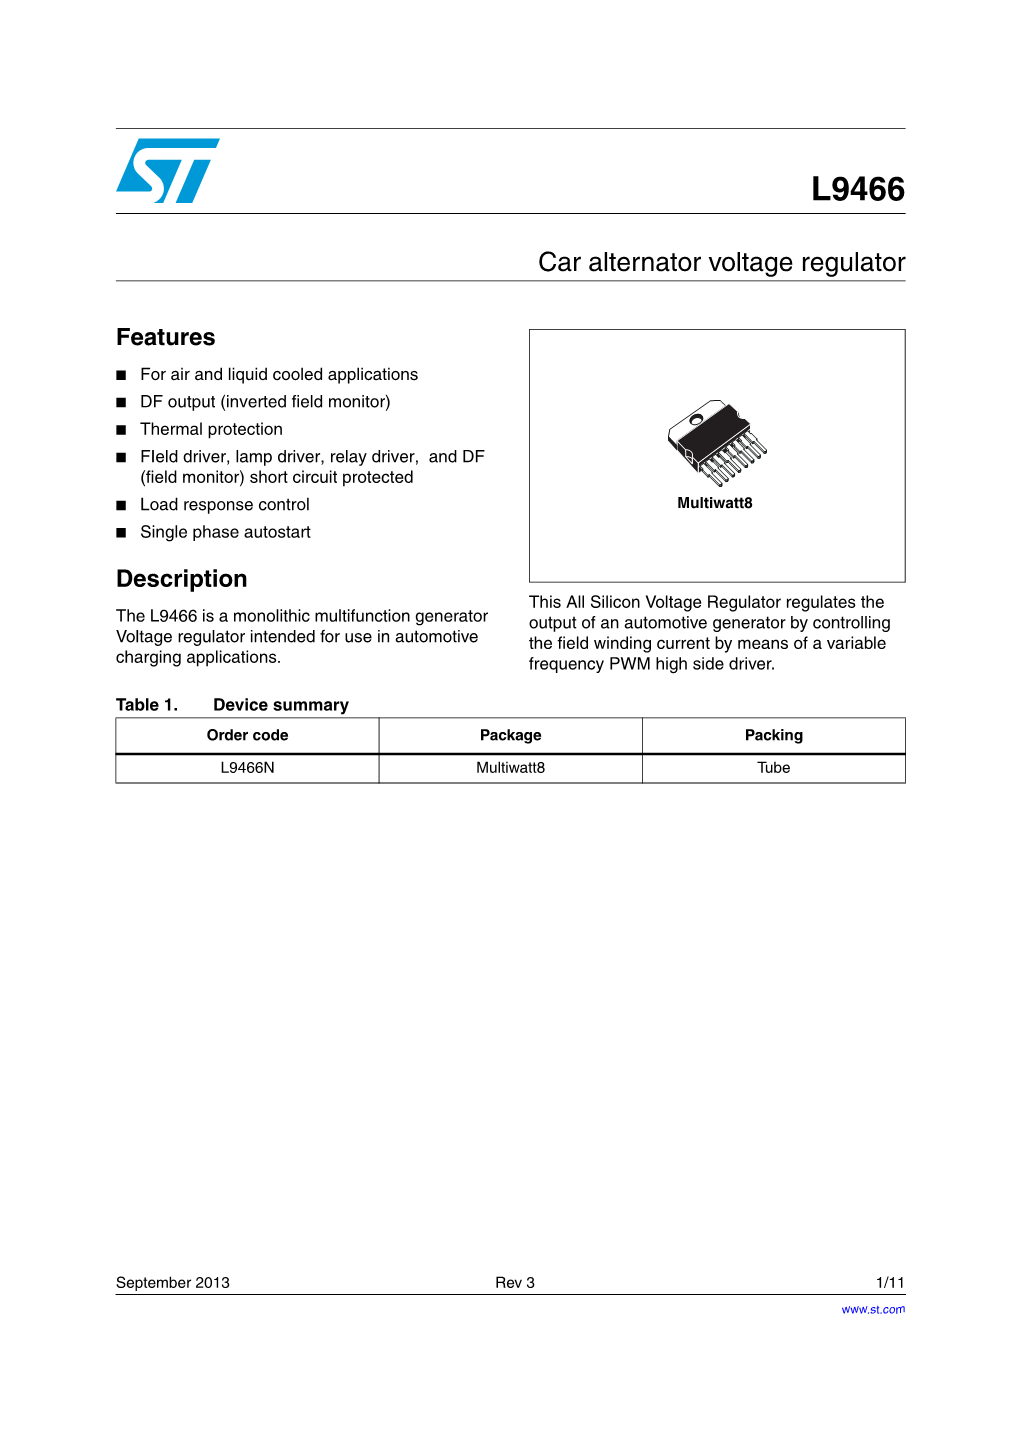 Car Alternator Voltage Regulator